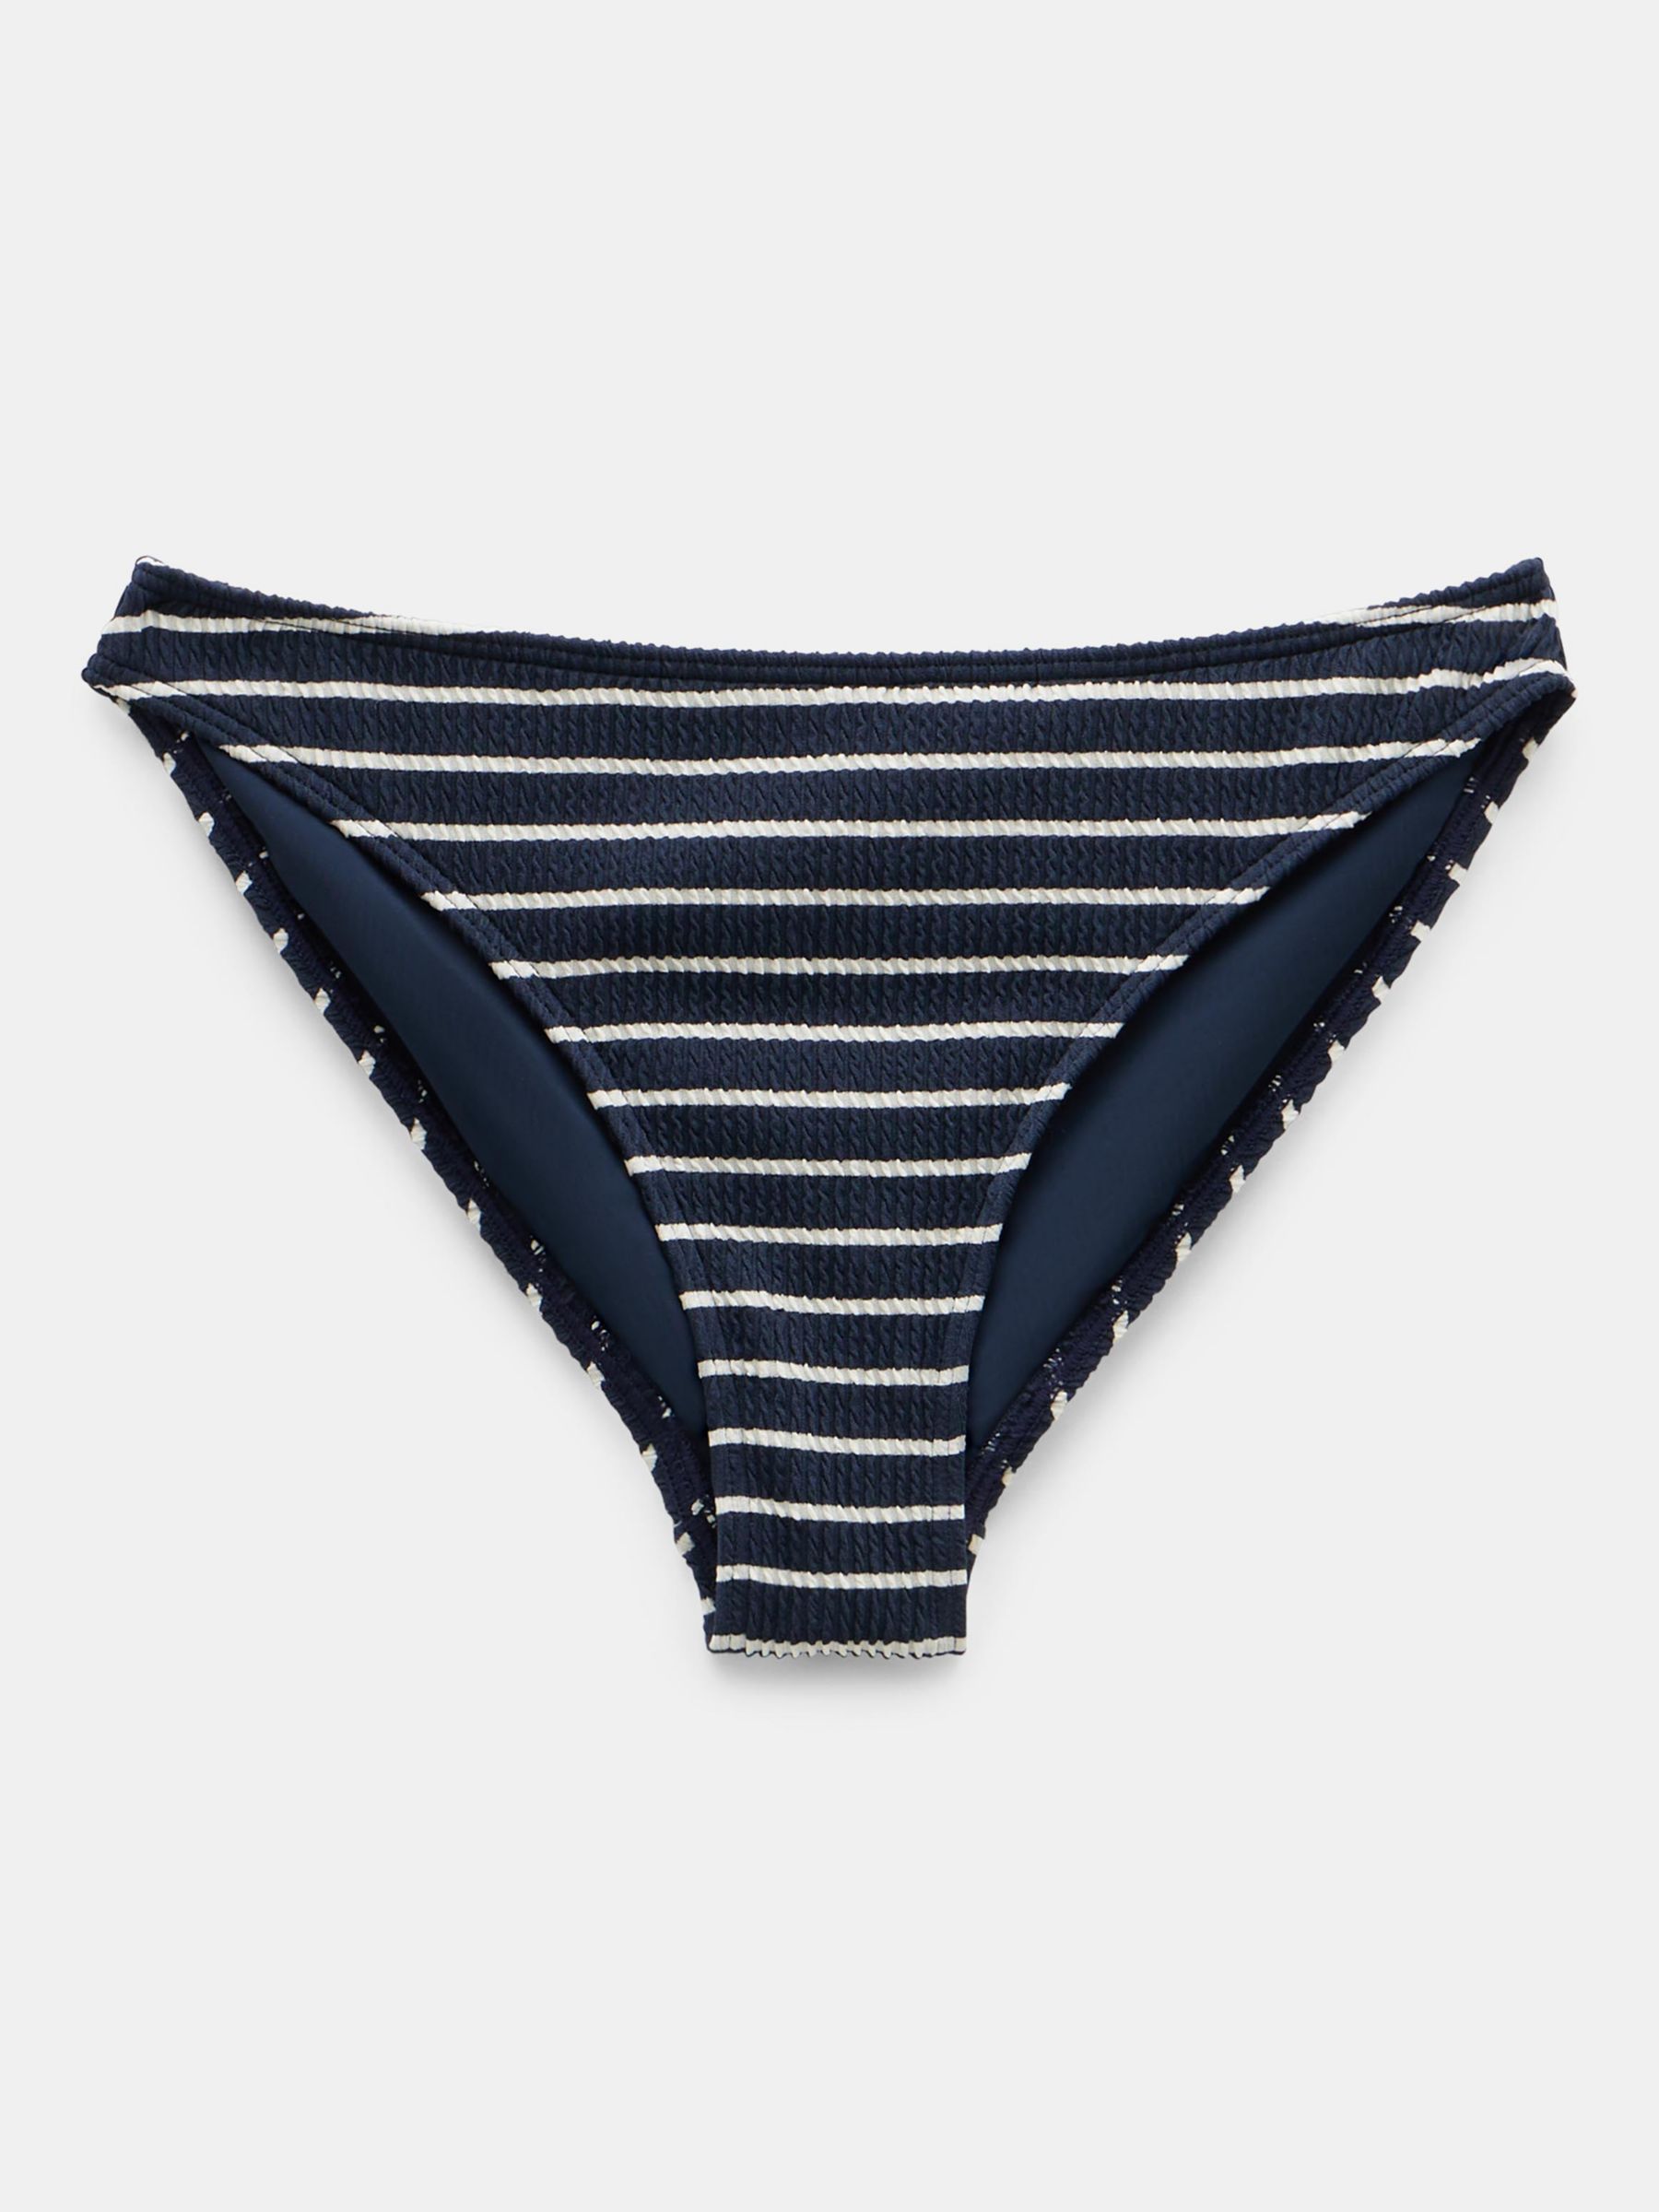 HUSH Cally Classic Stripe Bikini Bottoms, Navy/White, 6